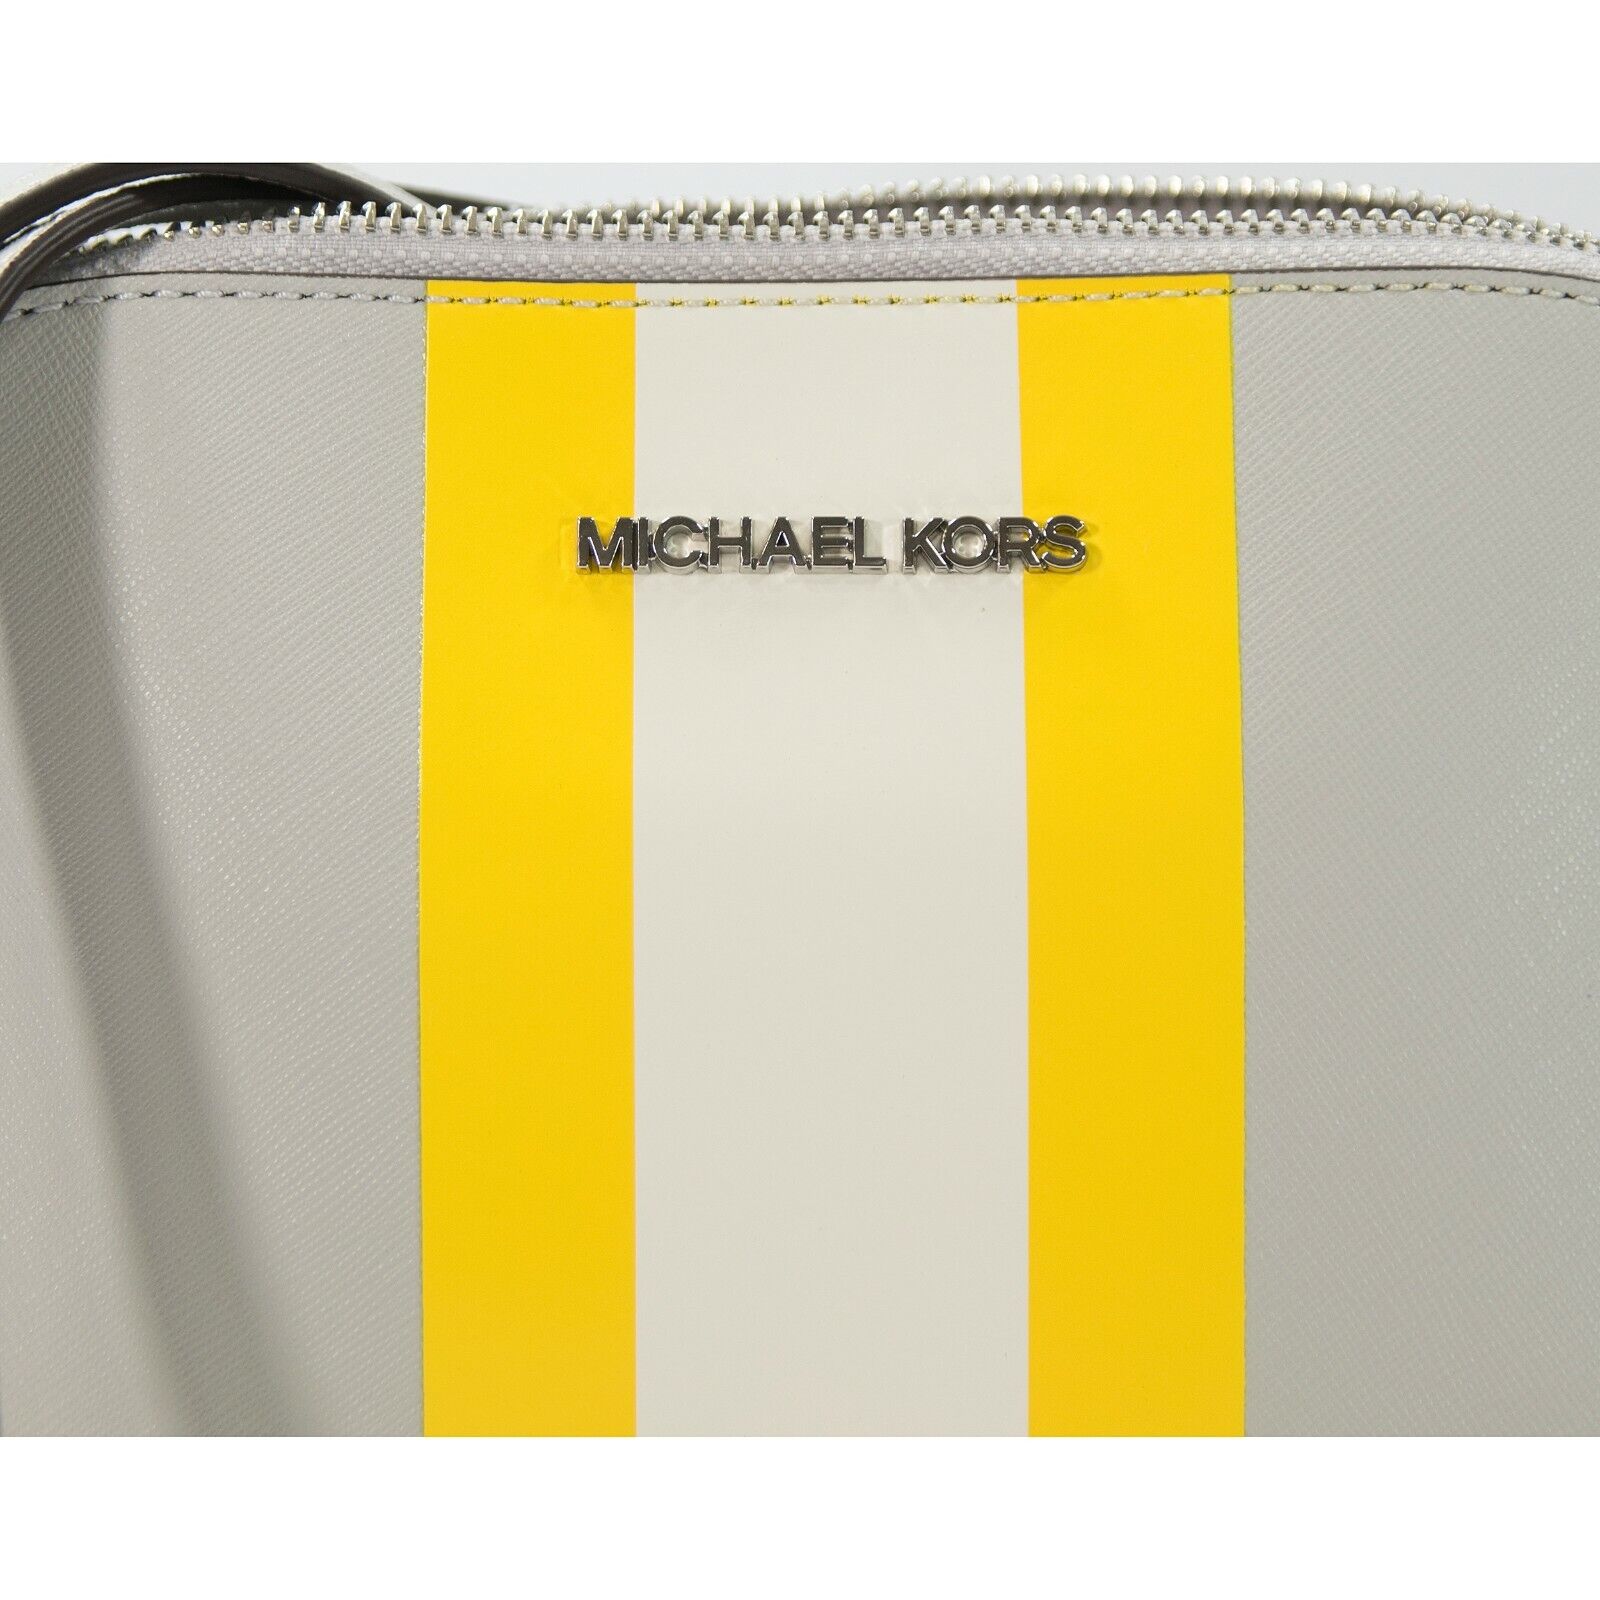 MICHAEL Michael Kors Cindy Large Dome Crossbody Bag